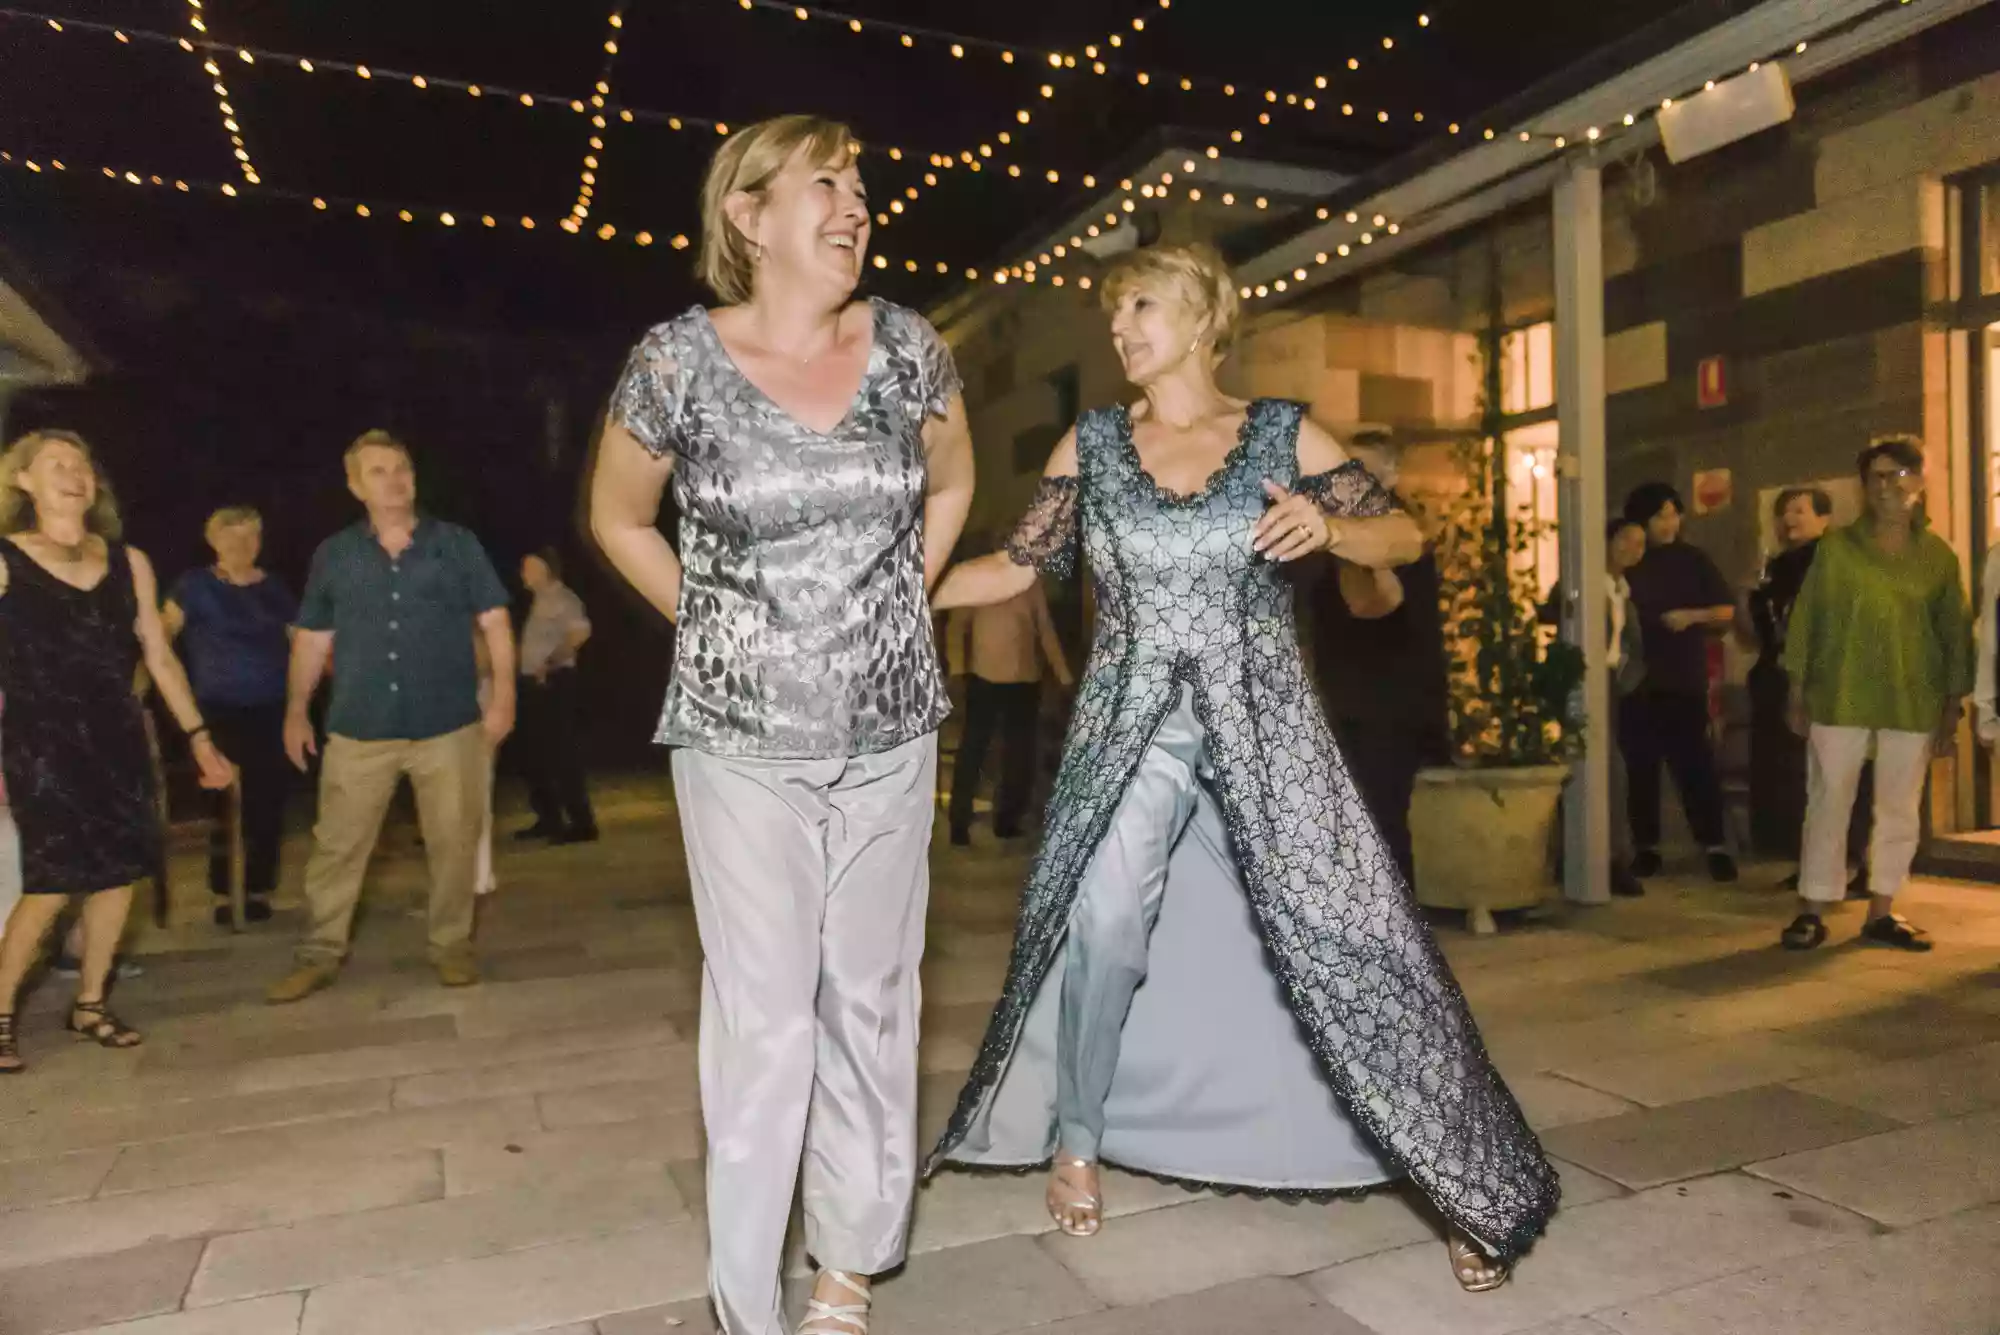 2 womem dancing at a wedding